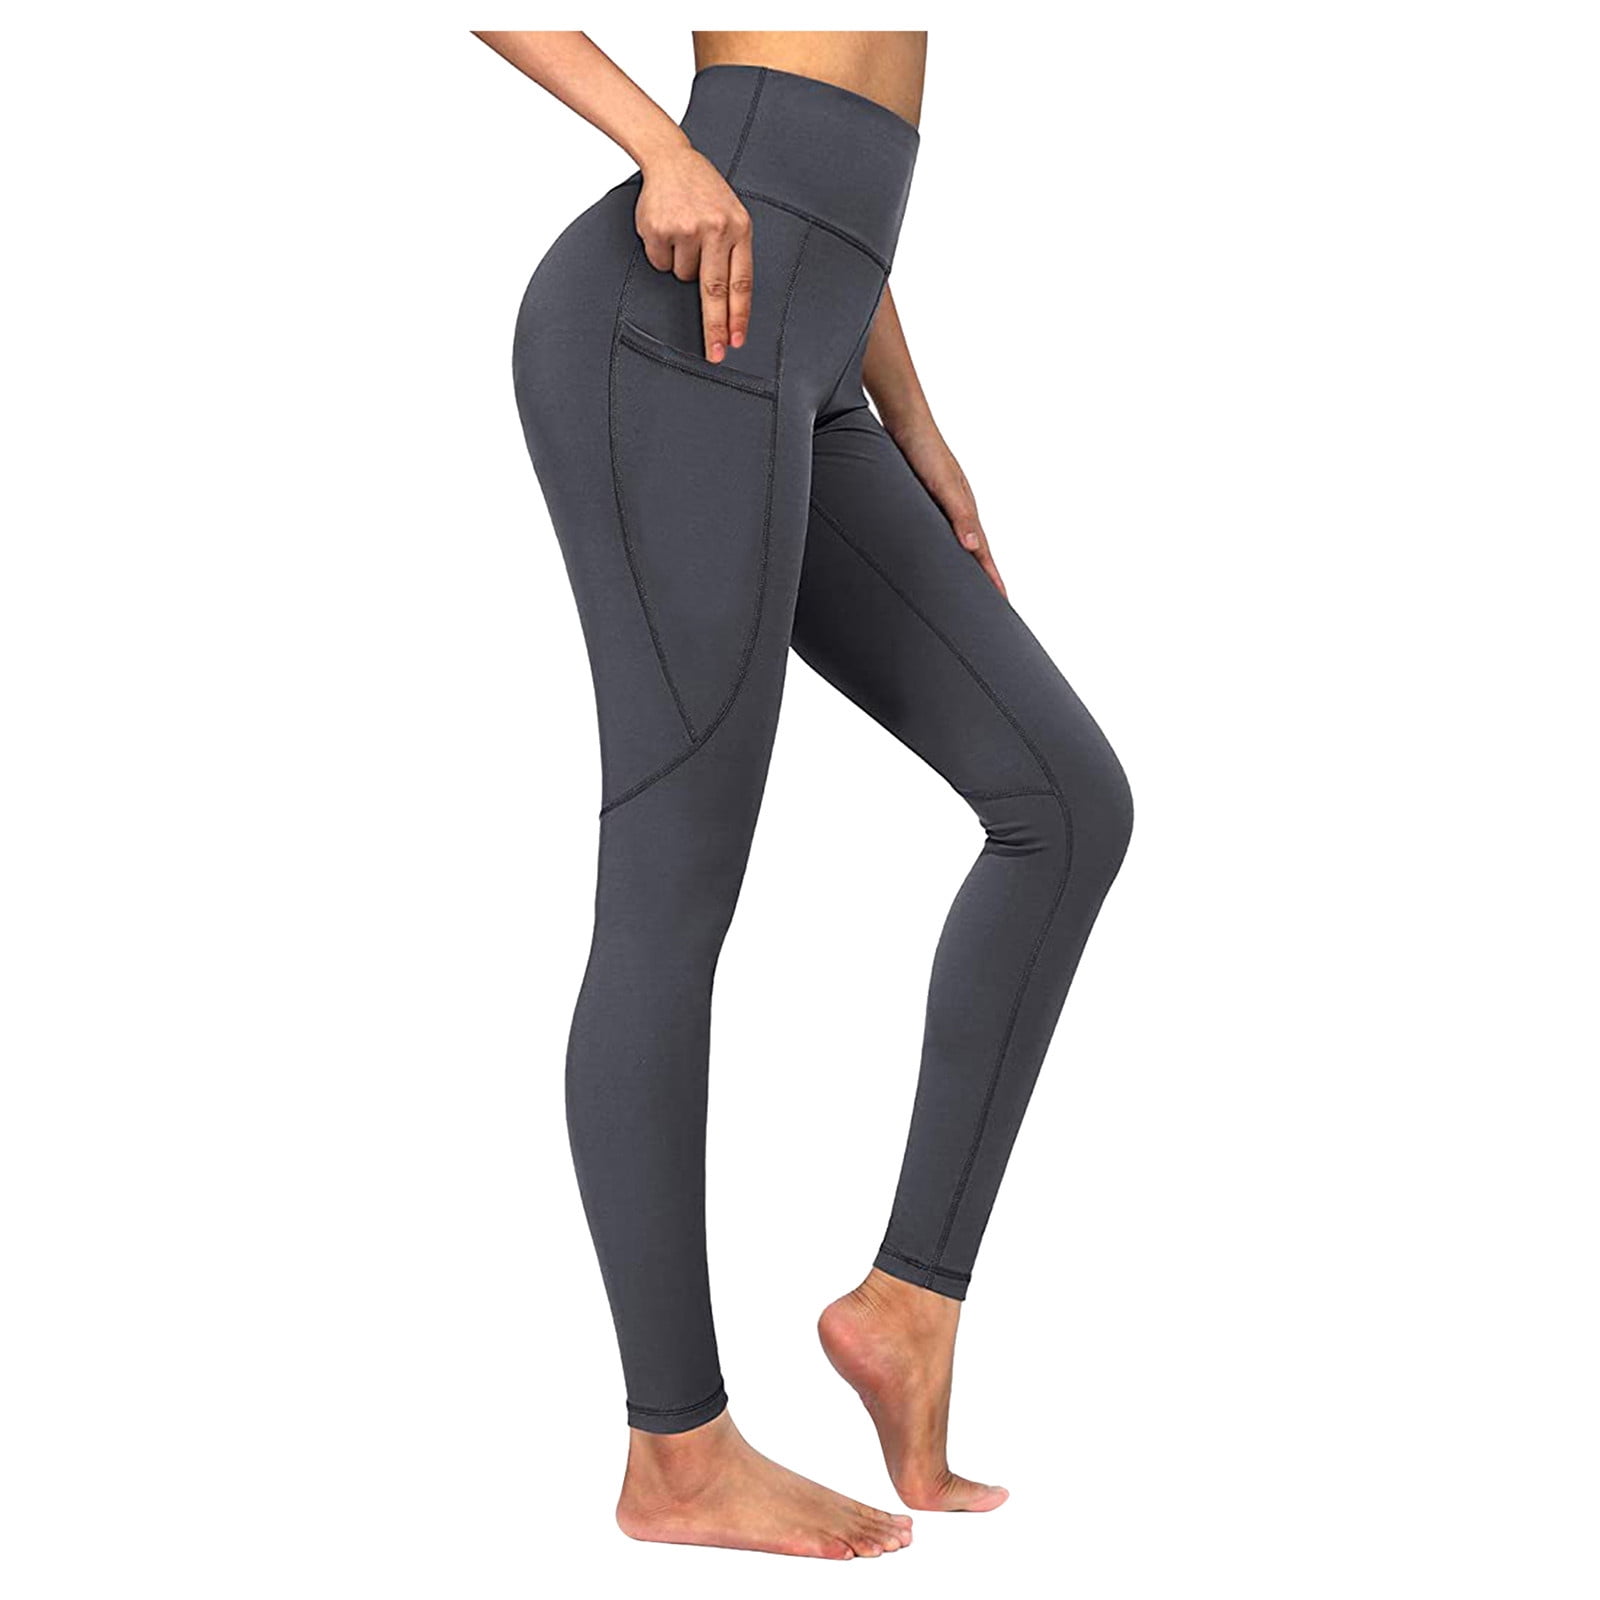 adviicd Yoga Pants For Girls Yoga pants Summer Sportswear High